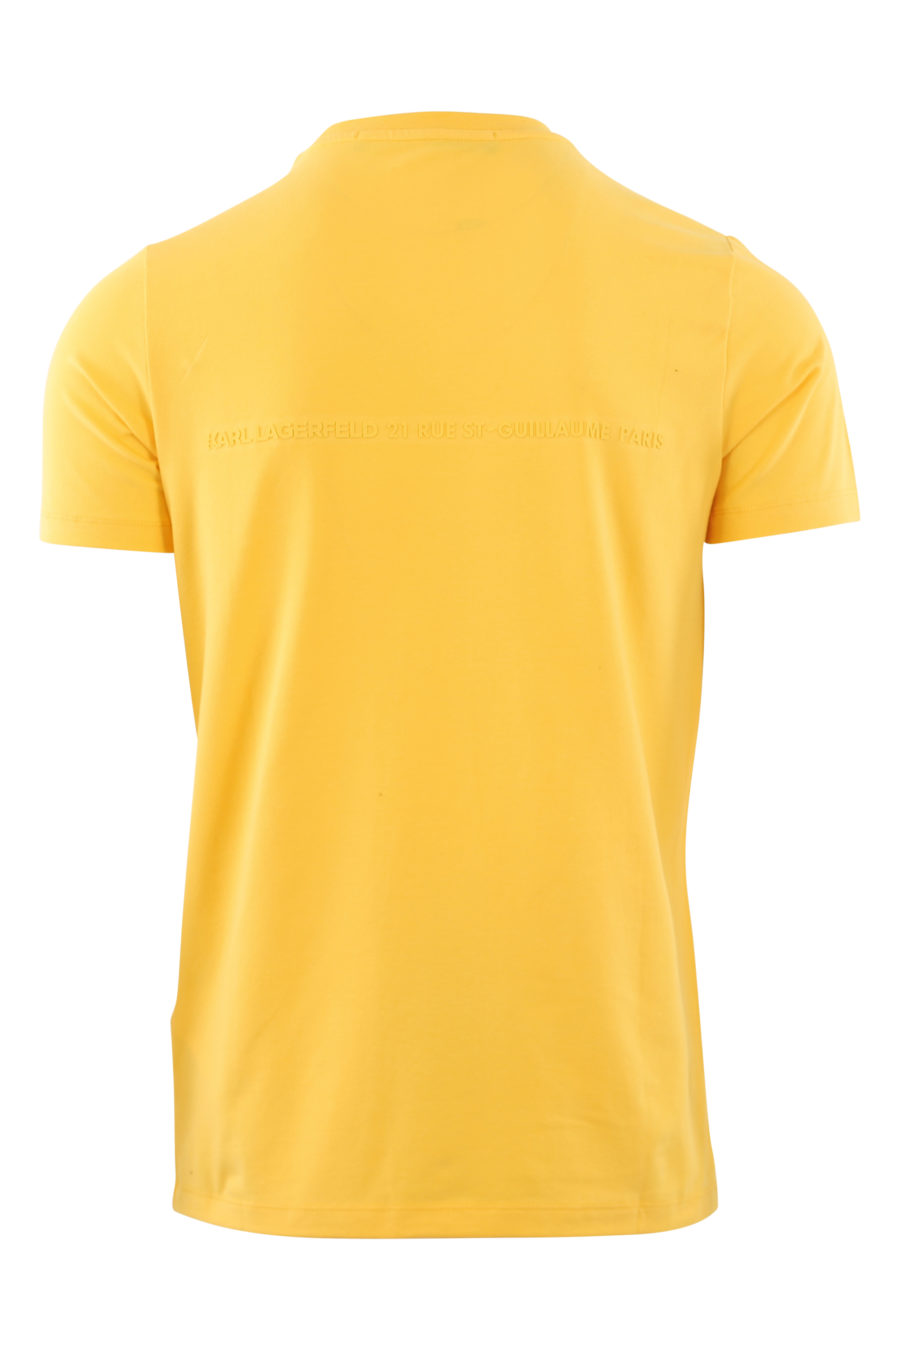 Camiseta amarilla con logo de goma amarillo - IMG 6497